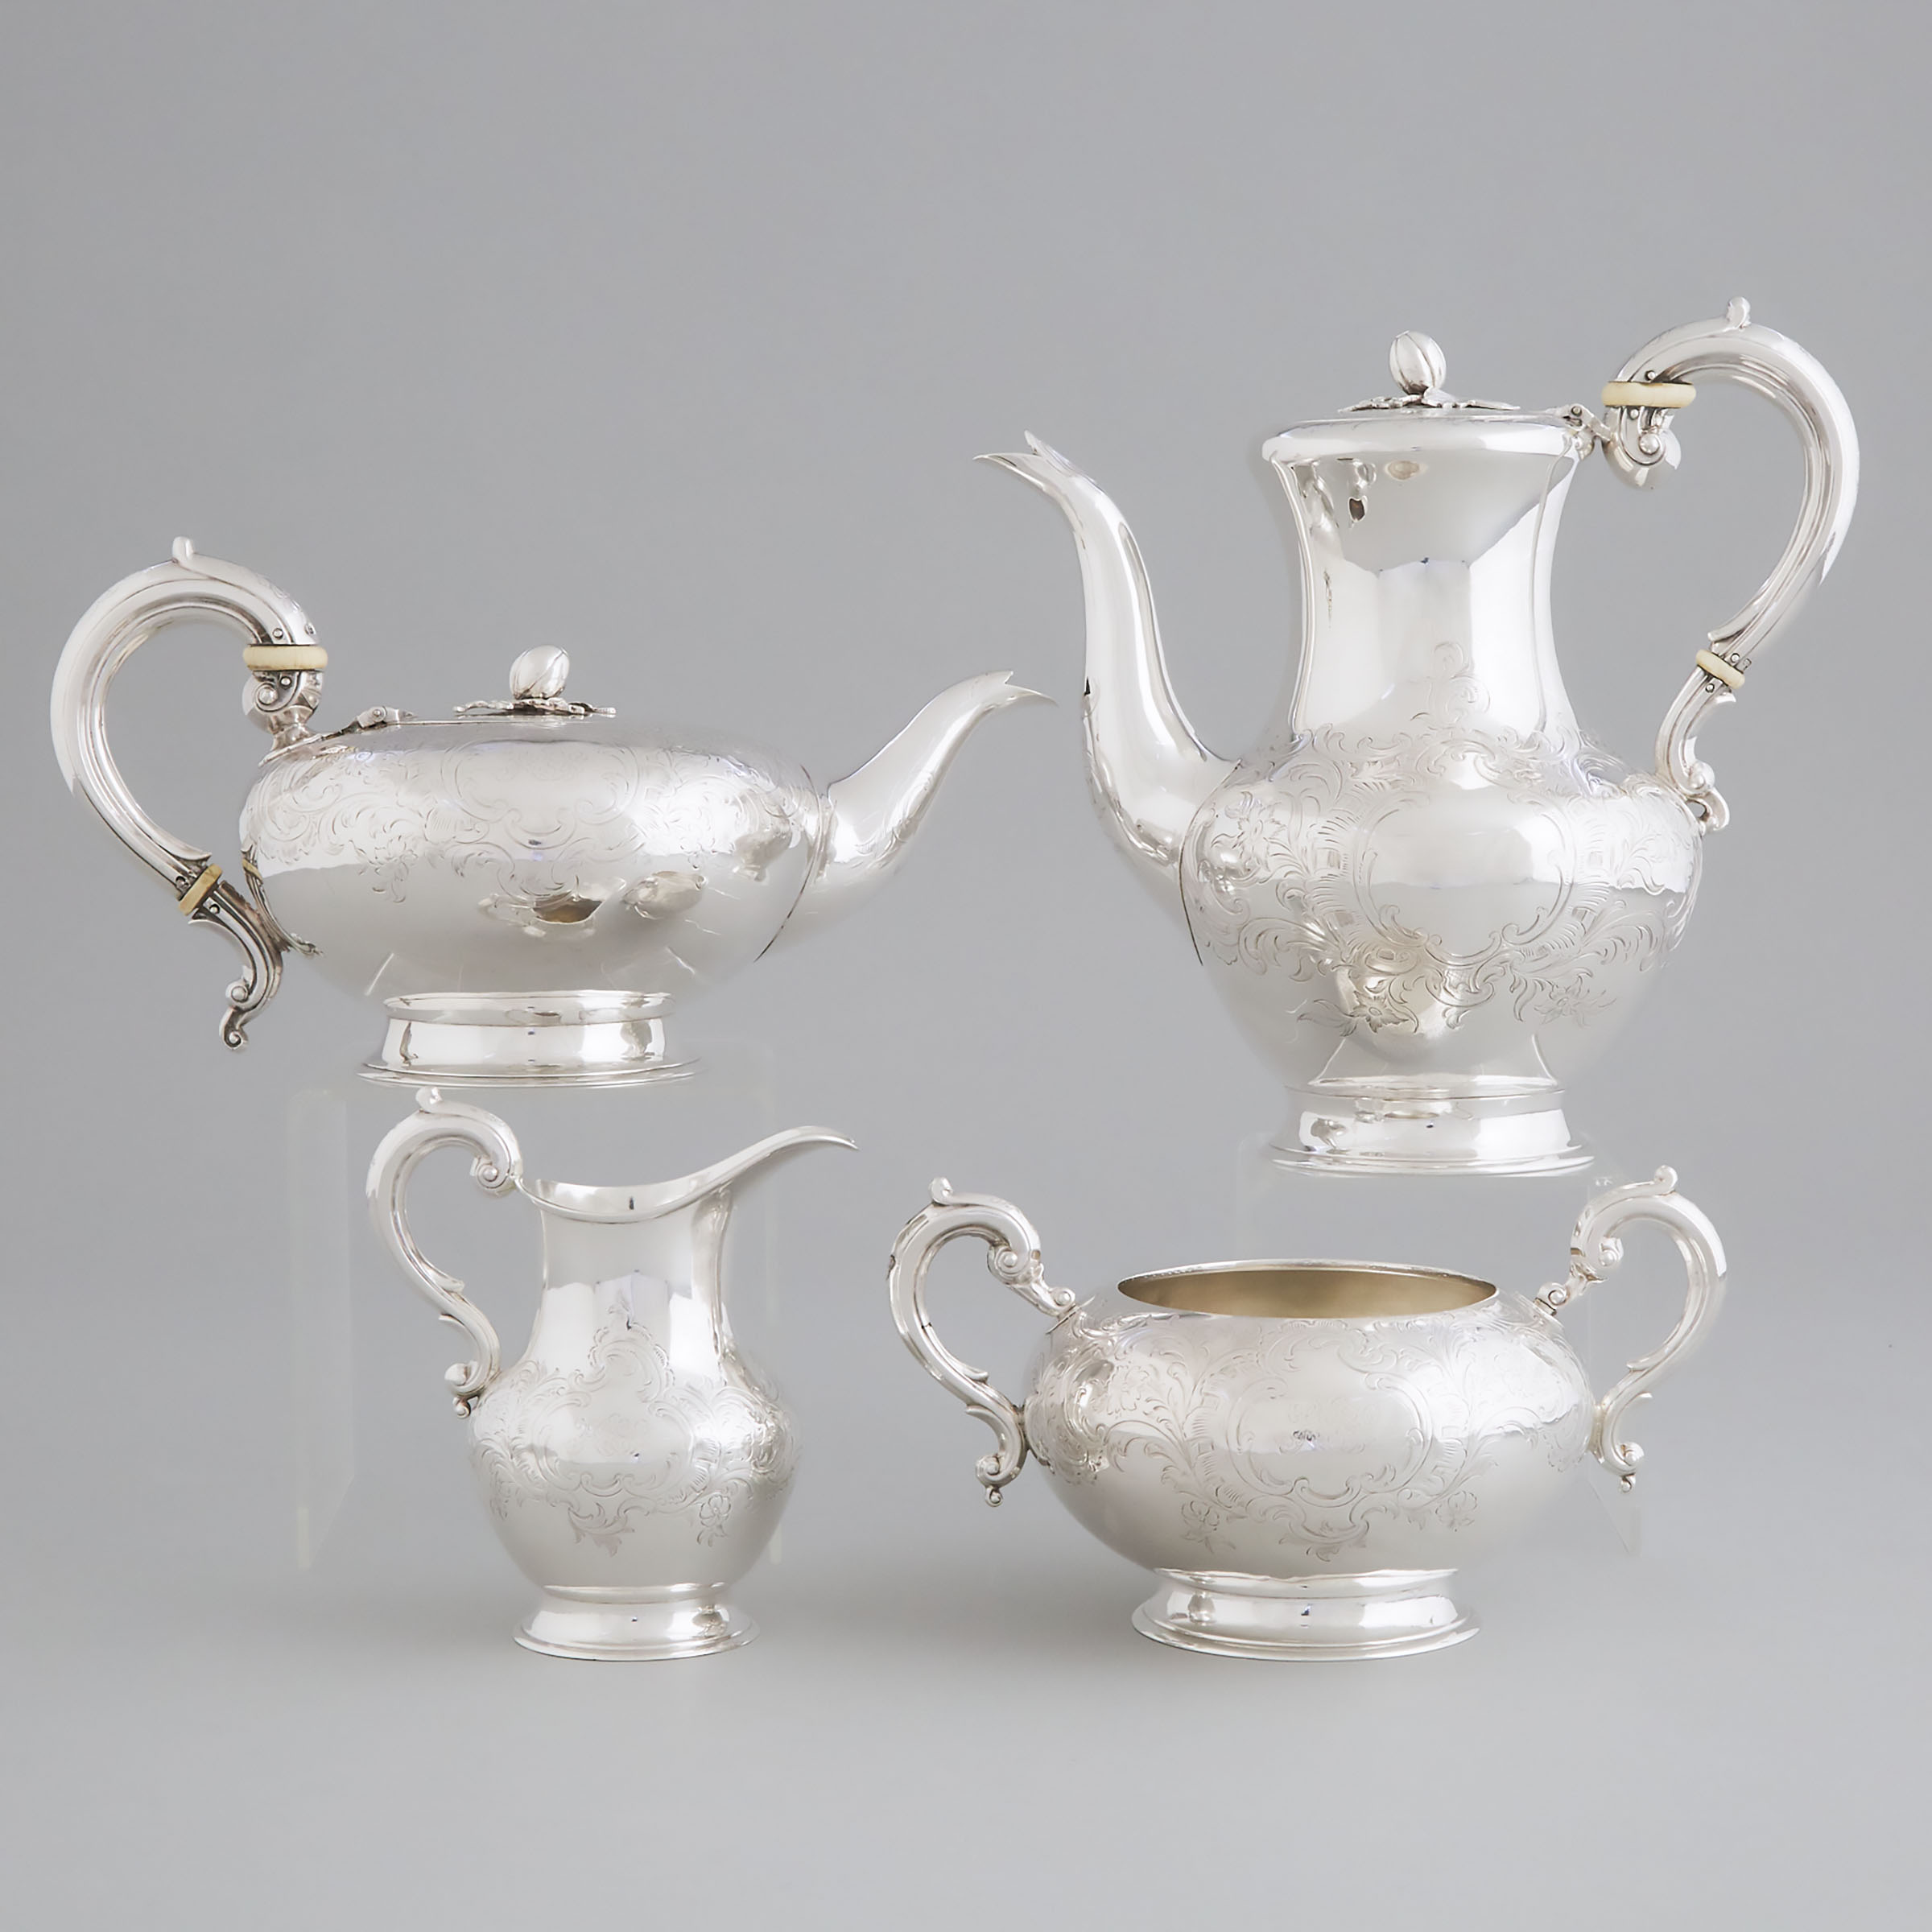 Victorian Silver Tea and Coffee Service, Richard Pearce & George Burrows, London, 1843/45